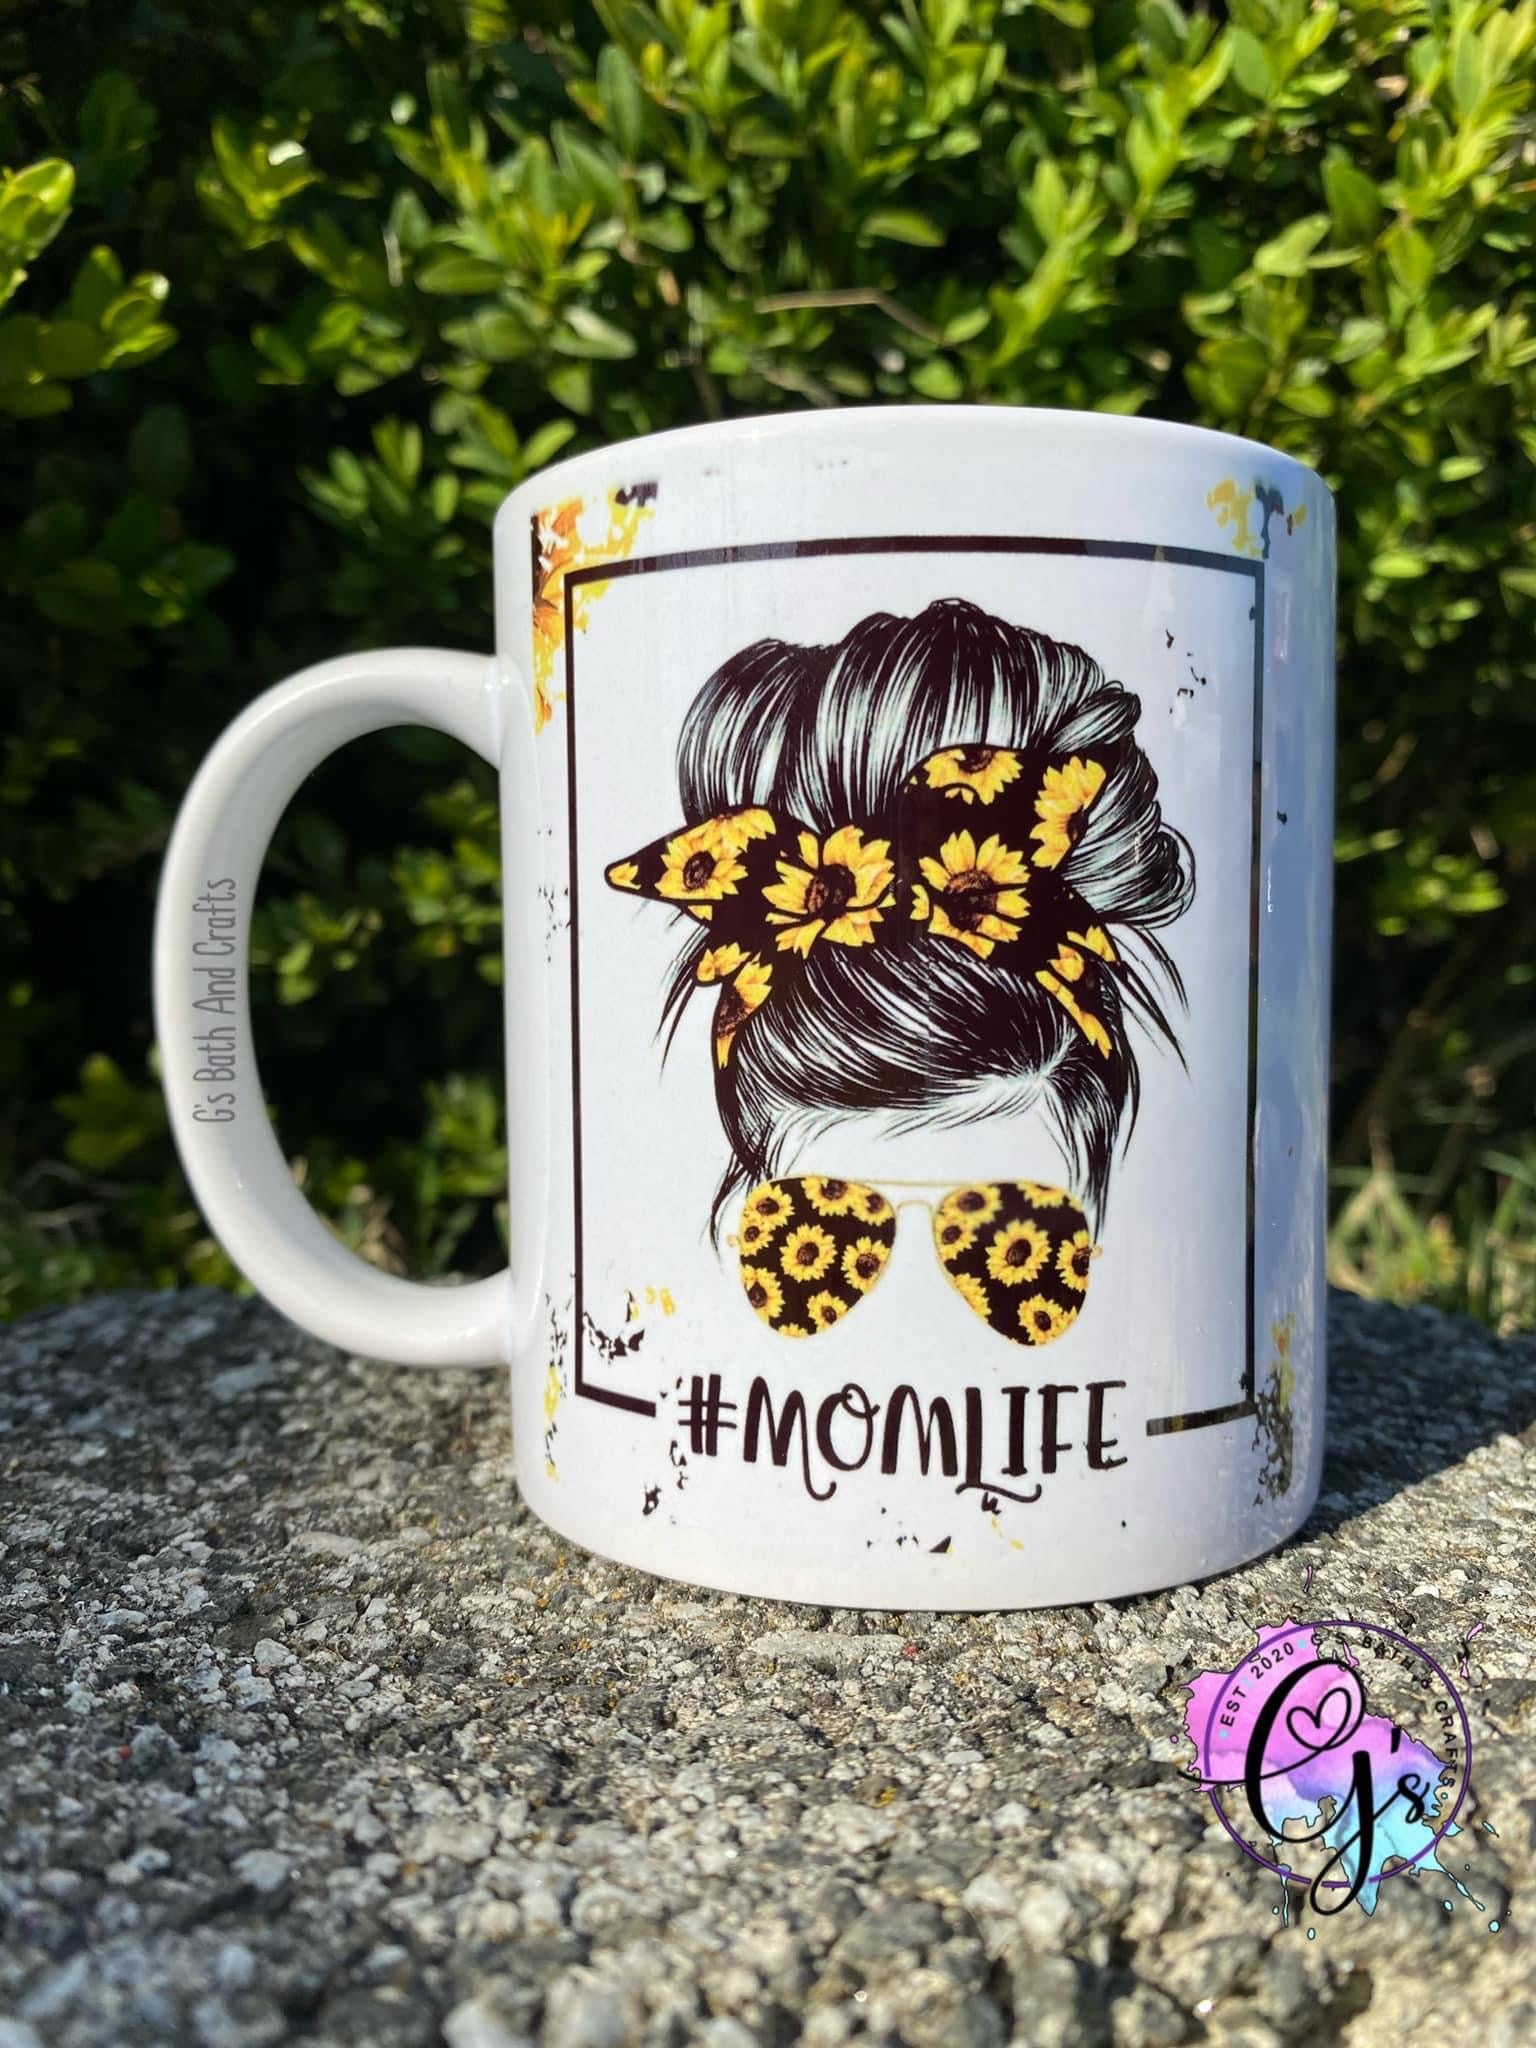 #MomLife Mug